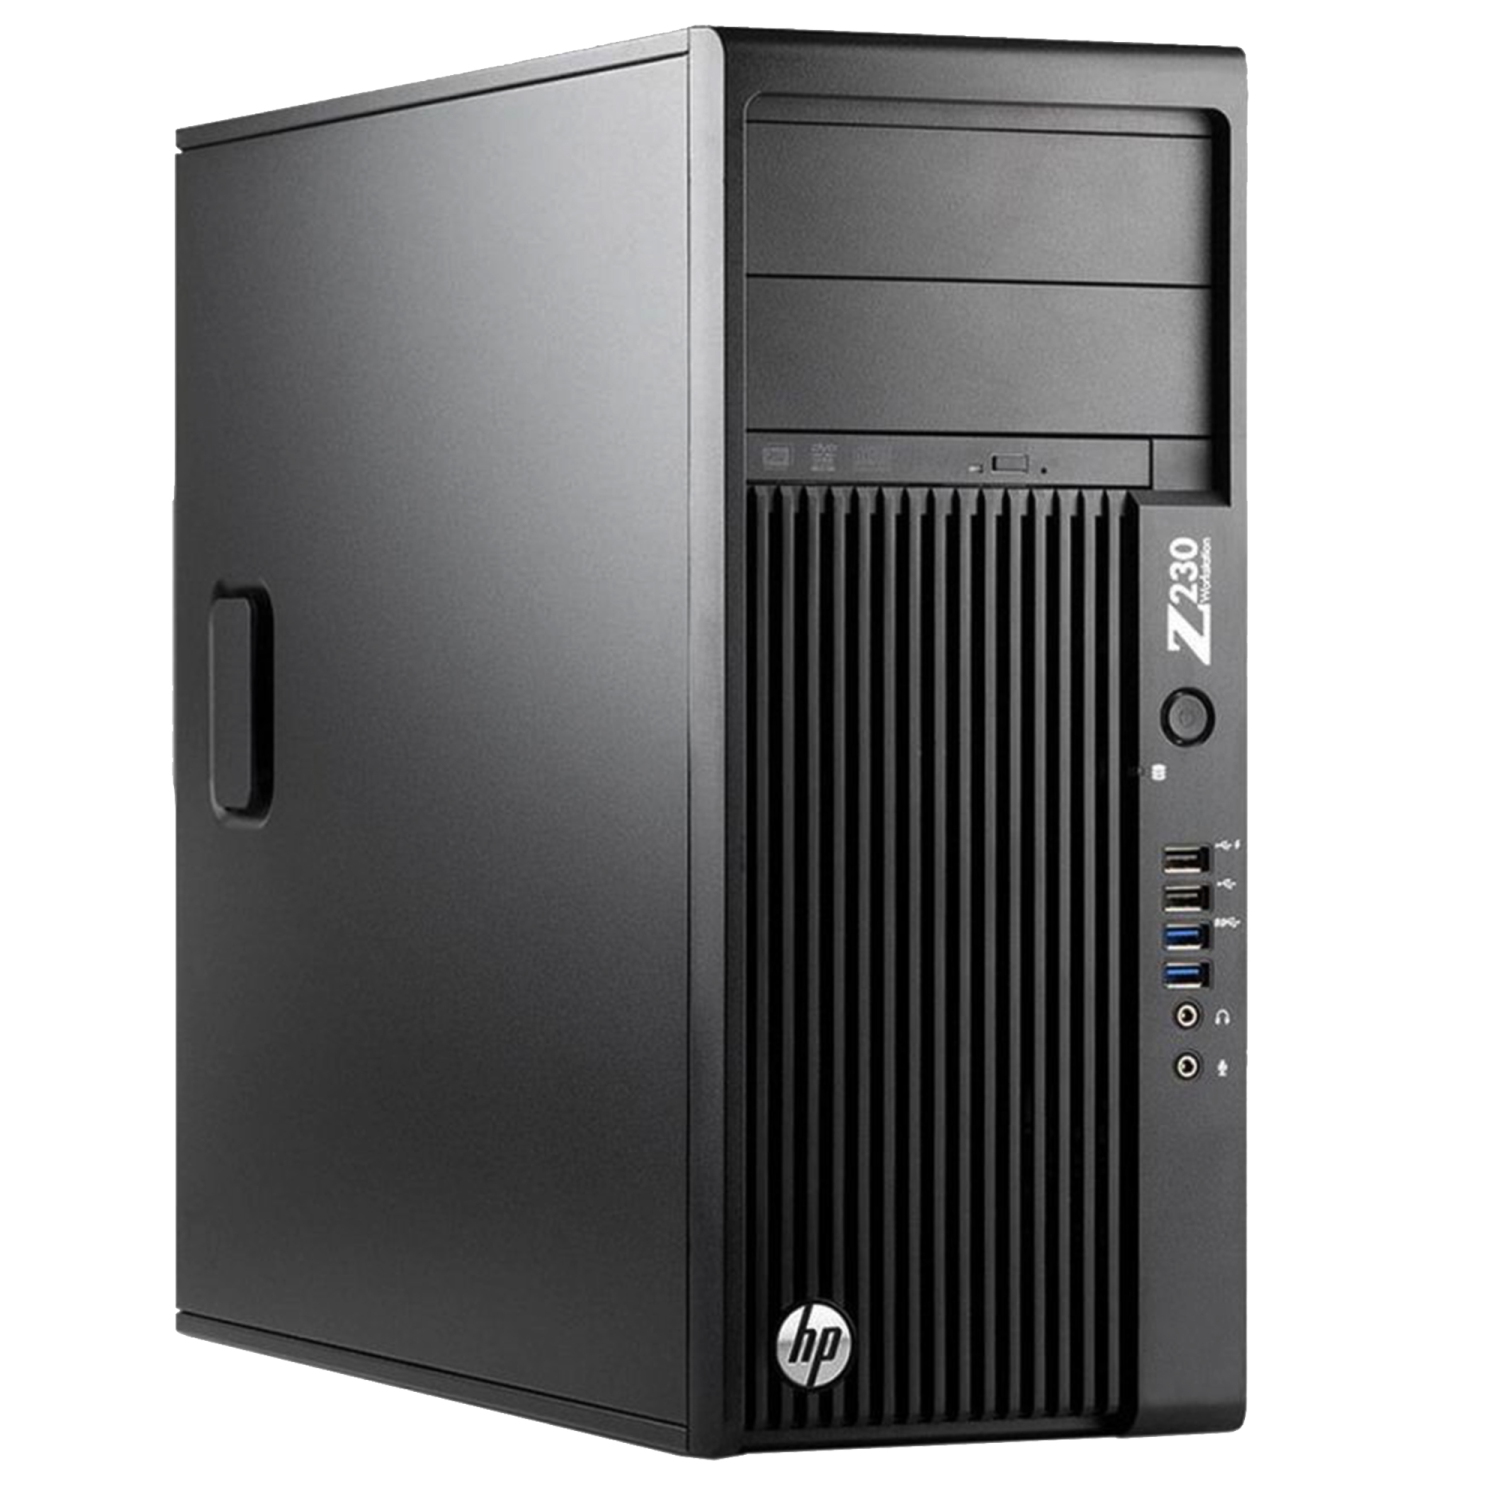 Refurbished (Good) - HP Z230 Tower Workstation Desktop PC Computer (Core i7/ 16GB RAM/ 256GB SSD/ WINDOWS 10 PRO) Intel - Black